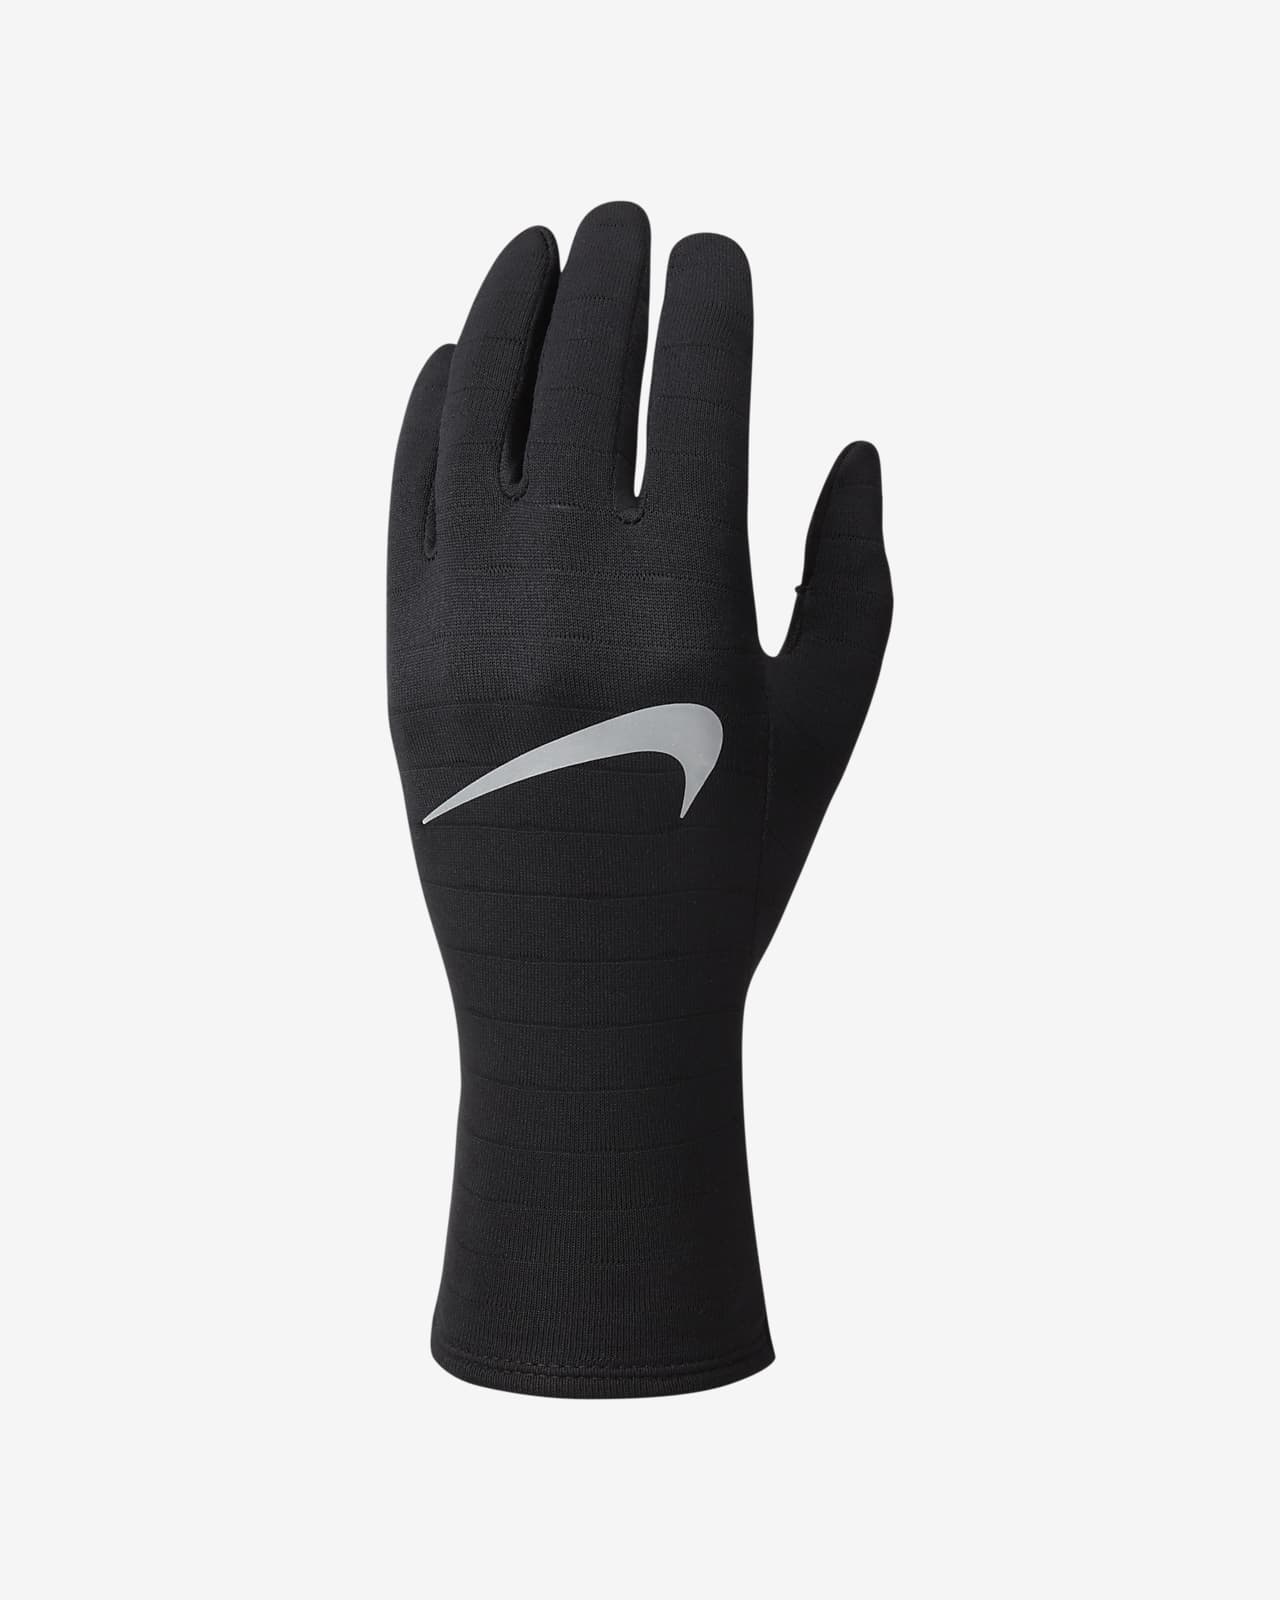  Nike Storm Fit 2.0 guantes de Running para mujer, M, Negro :  Todo lo demás